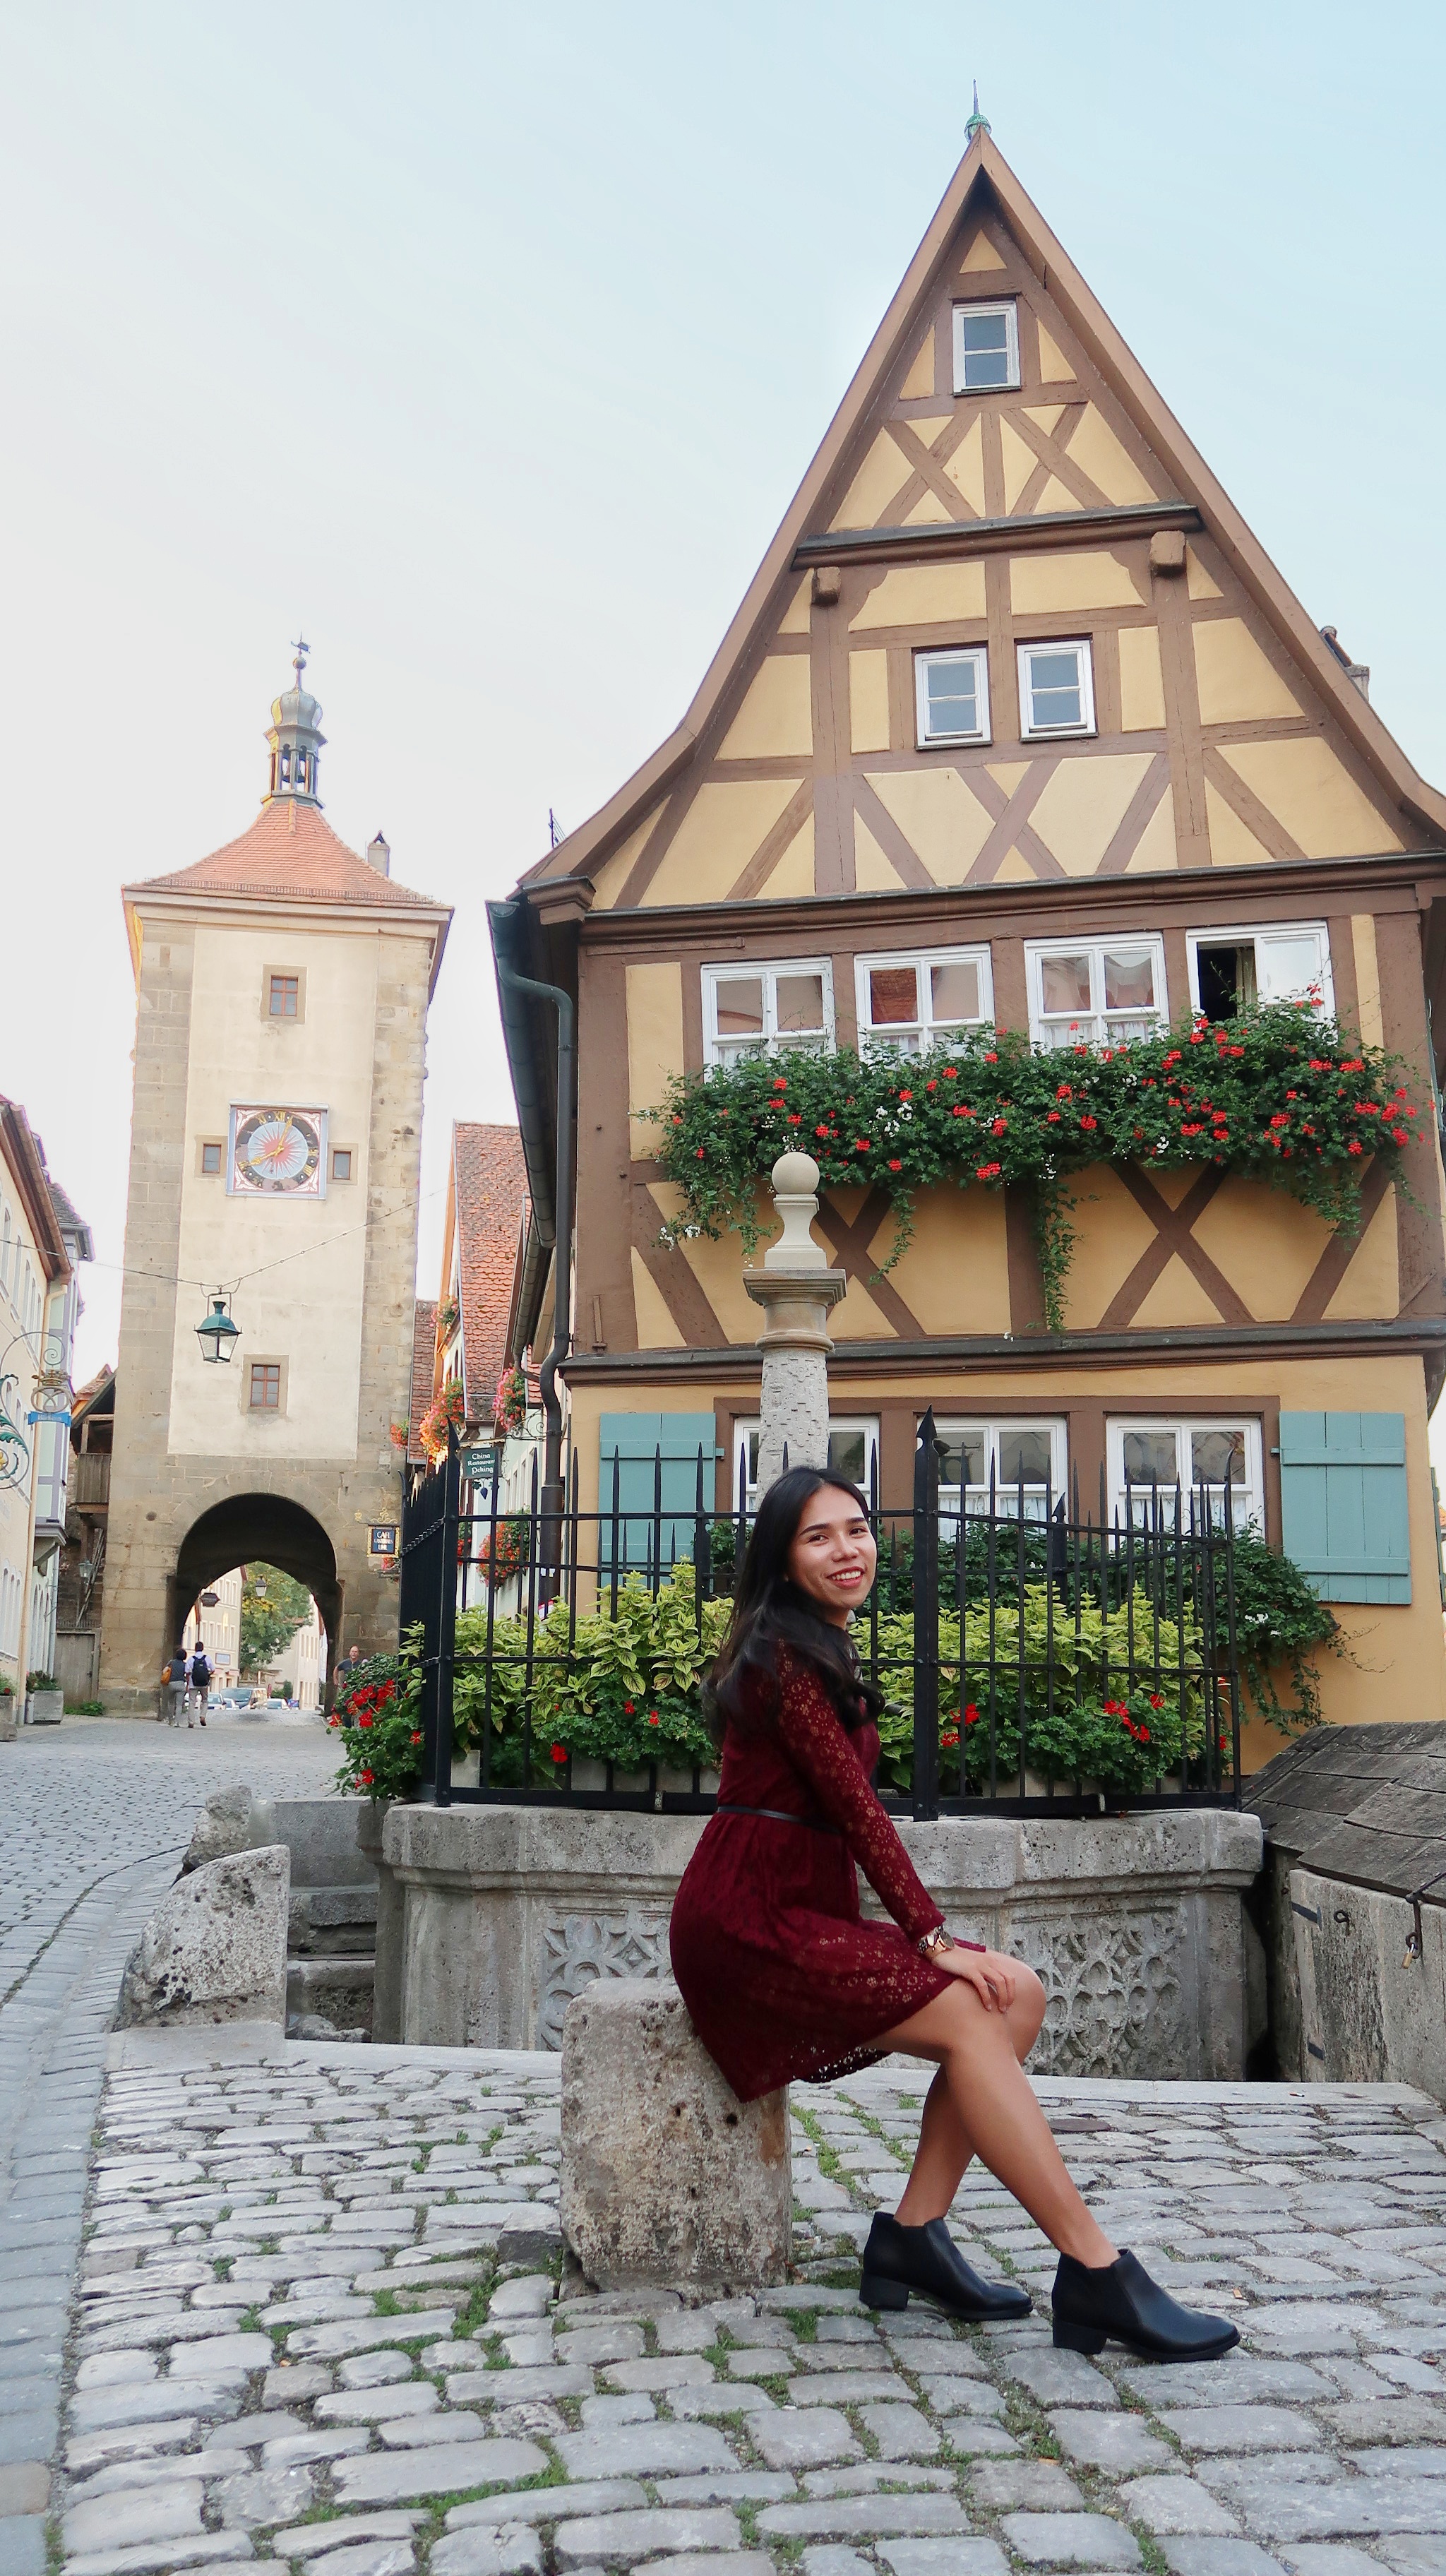 Exploring lovely town in Germany – Rothenburg ob der Tauber